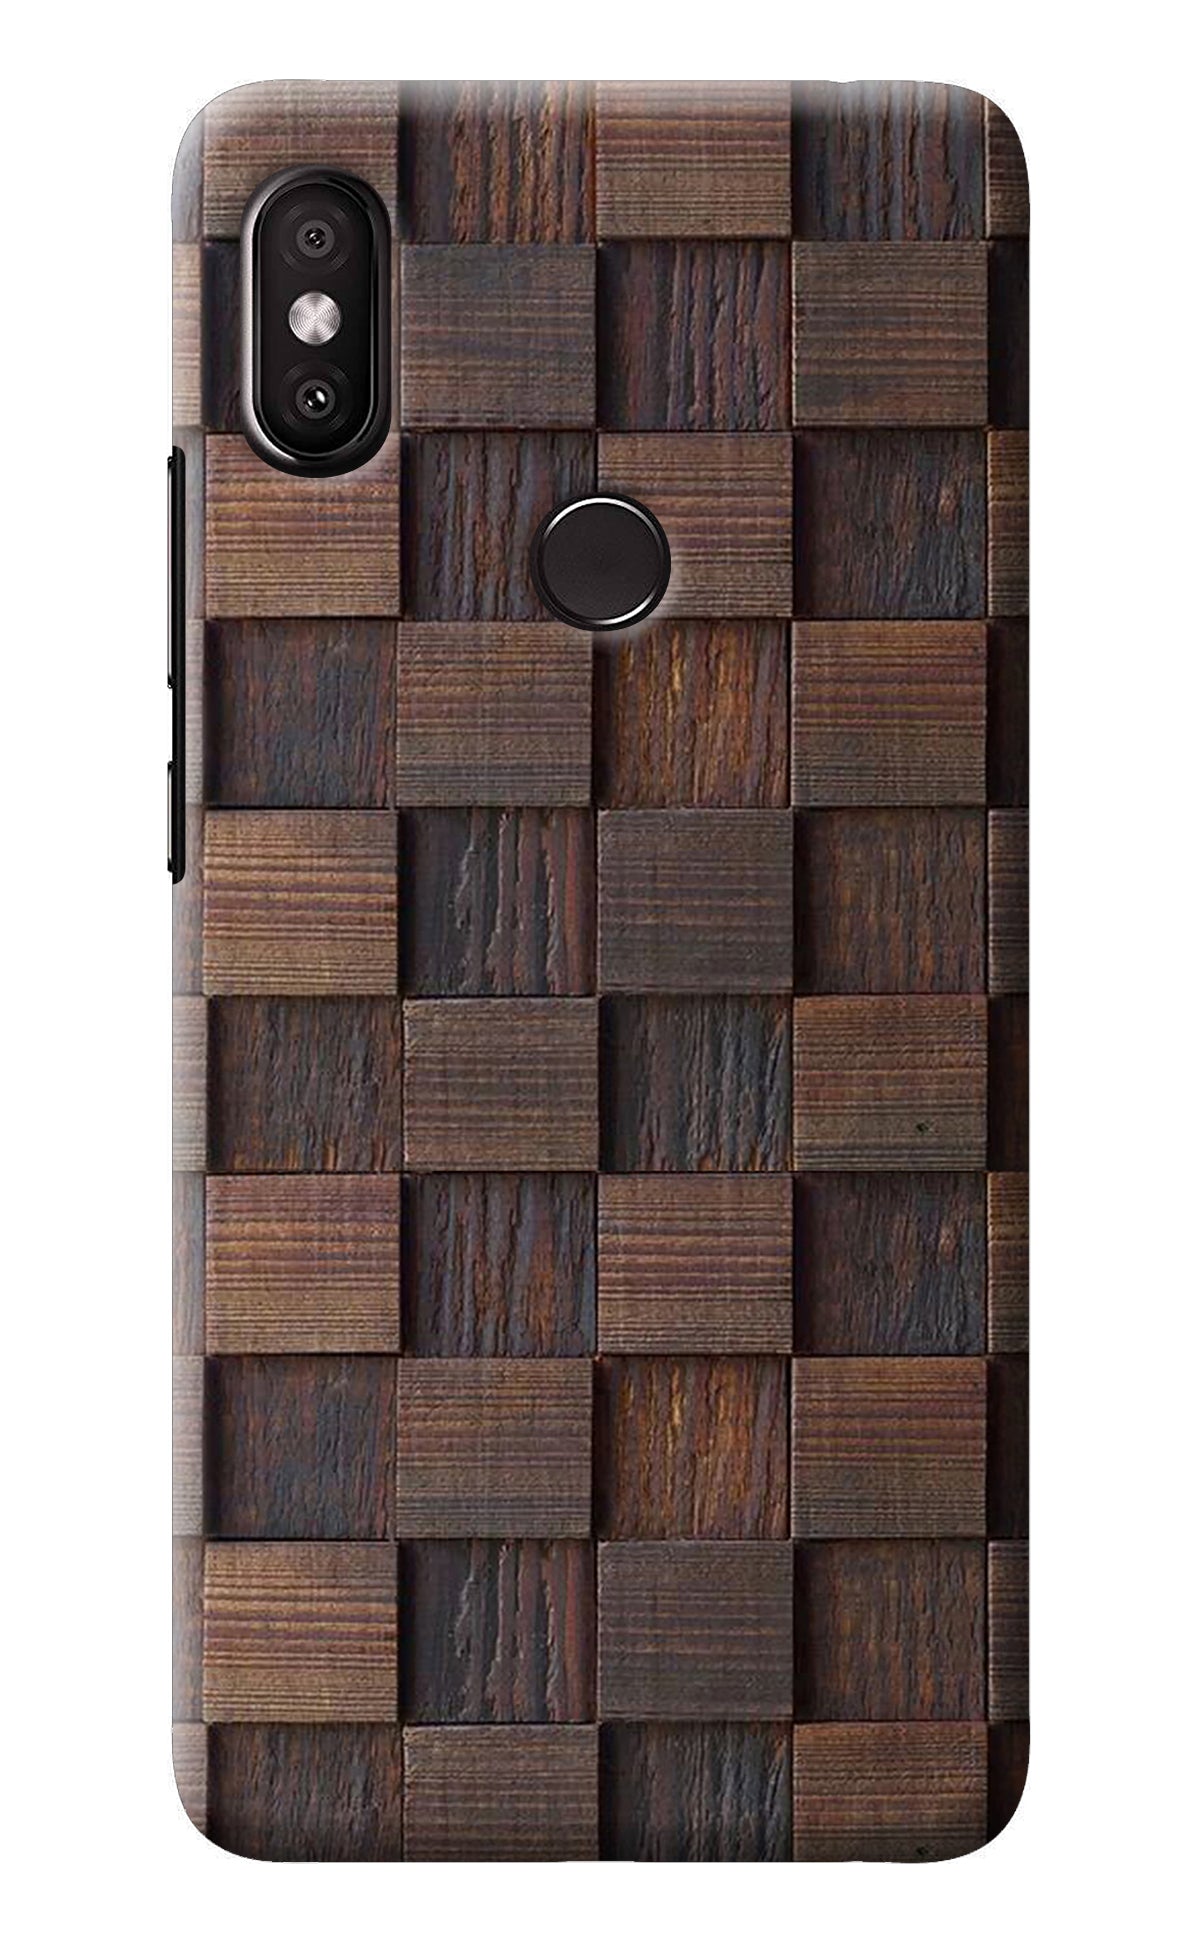 Wooden Cube Design Redmi Y2 Back Cover